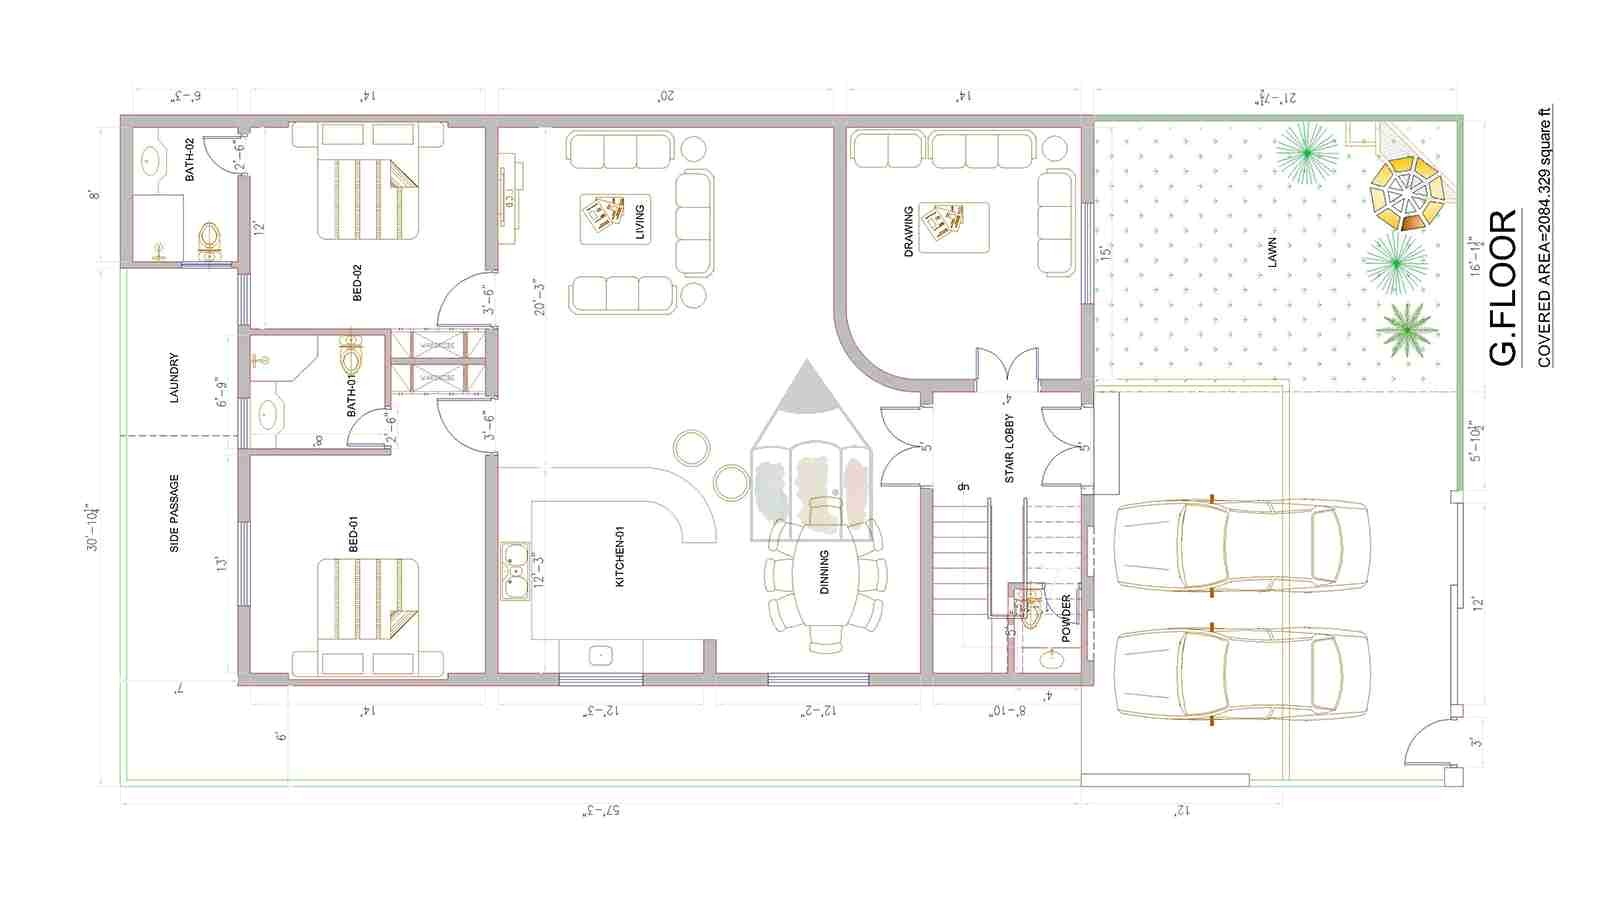 14 marla house plan layout